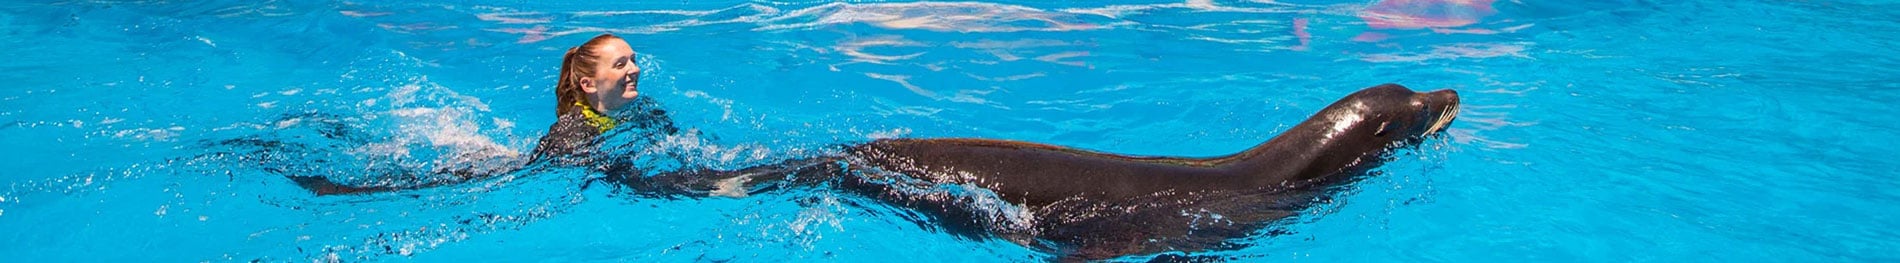 SeaWorld San Antonio In-Water Swimming with Sea Lion 